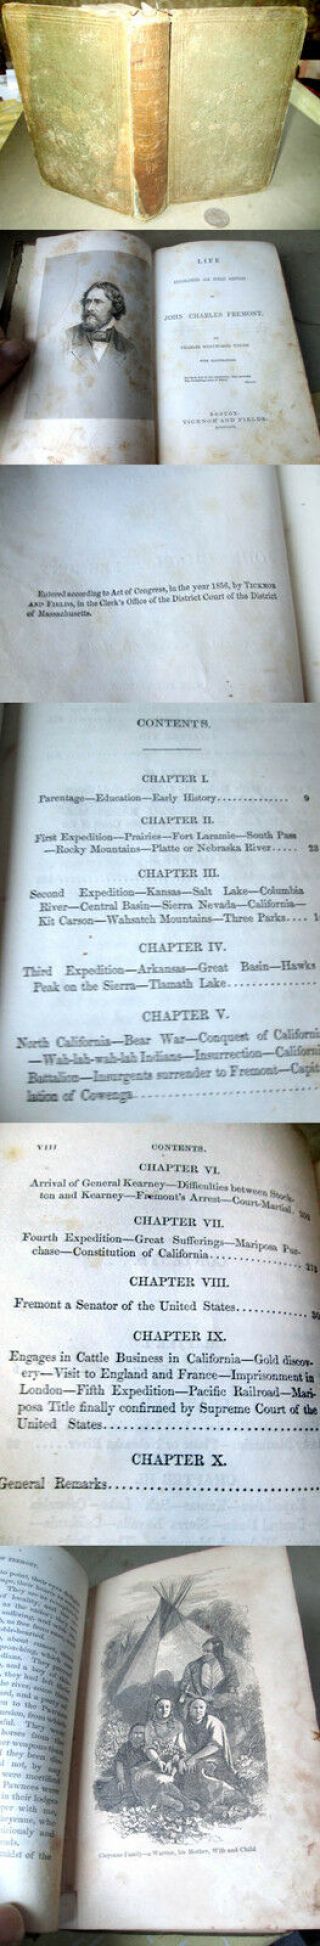 Life,  Explorations Of John Charles Fremont,  1856,  Charles Wentworth Upham,  1sted,  Ils